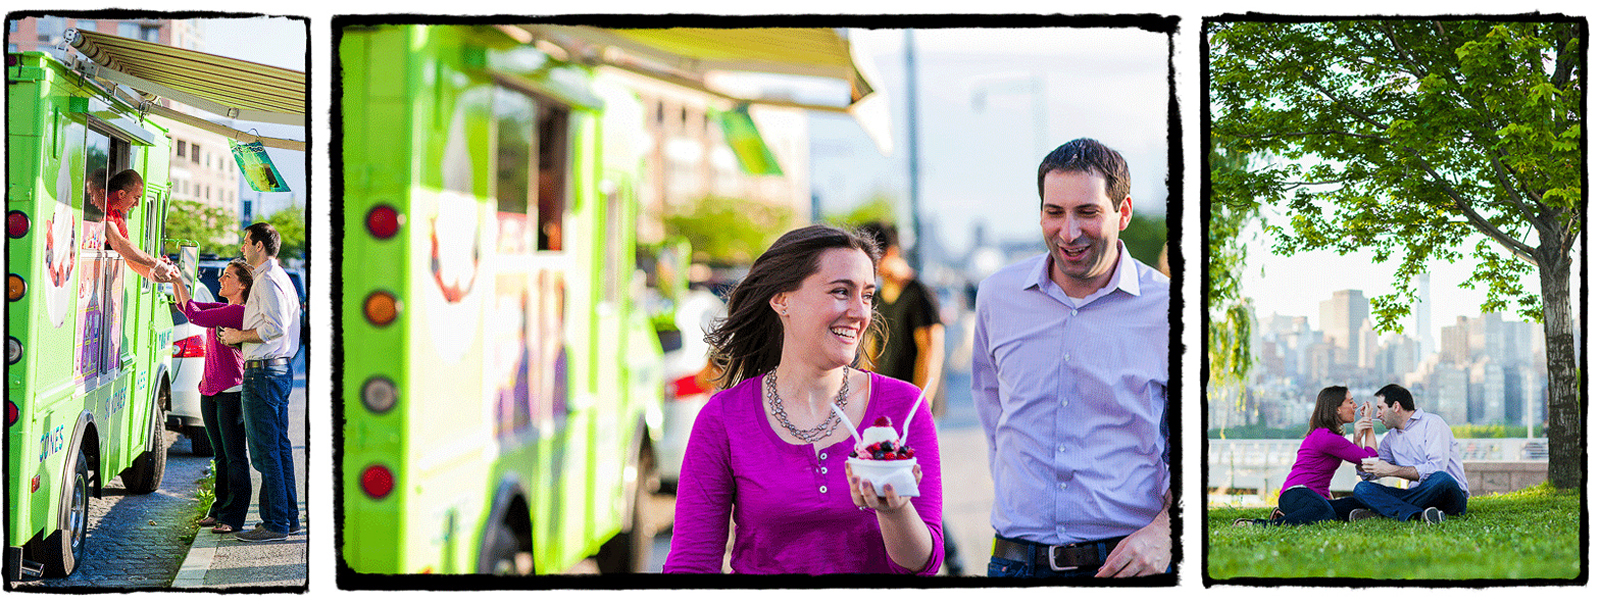 Engagement Portraits: Johanna & Greg visit the ice cream truck in Long Island City.